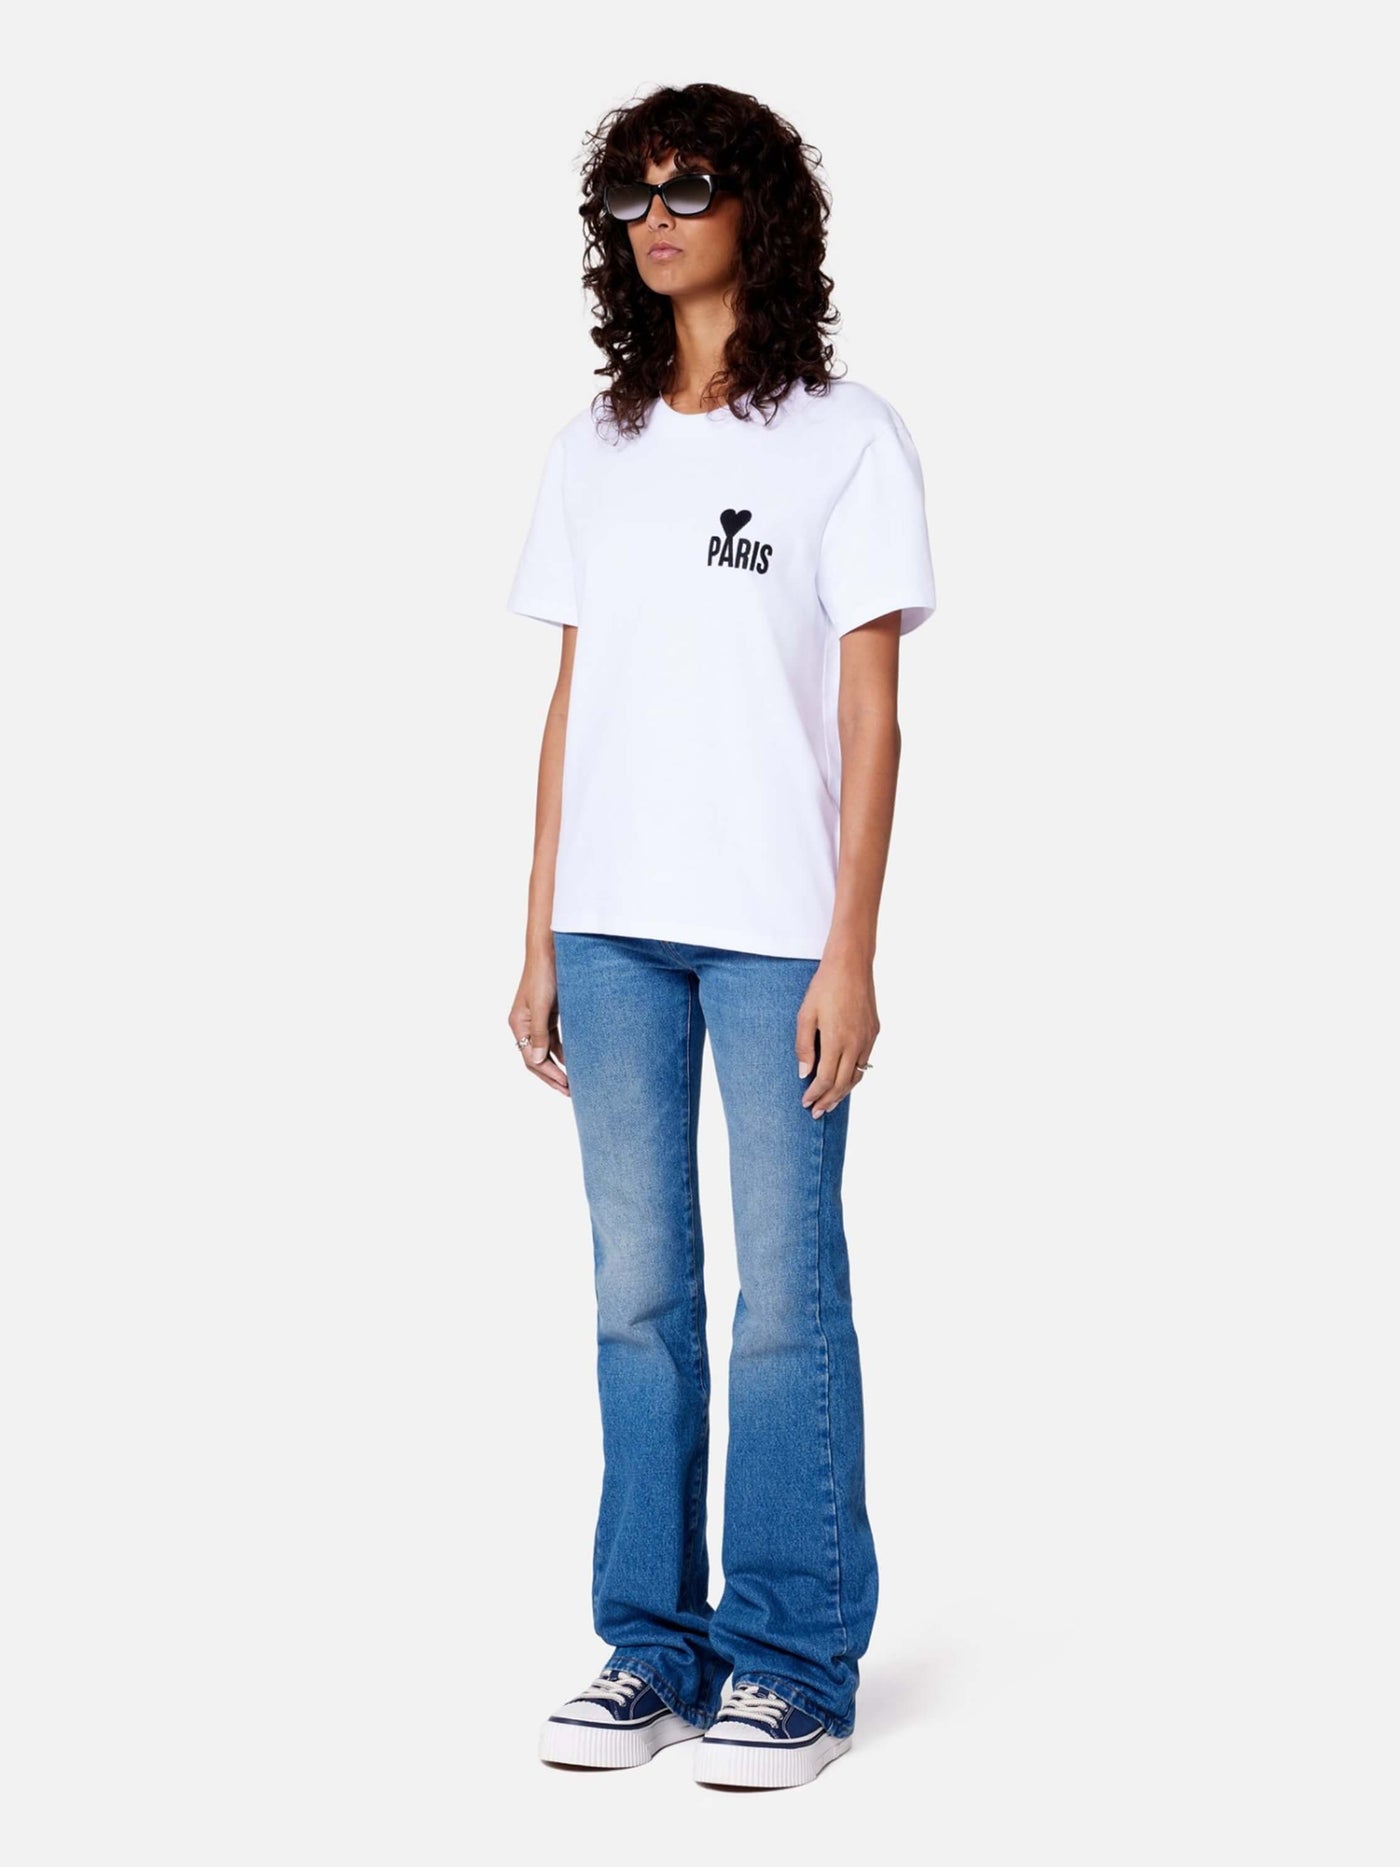 AMI Paris Shirts & Tops | T-Shirt AMI Paris weiß | UTS014.701 251 white / ADAM/EVE